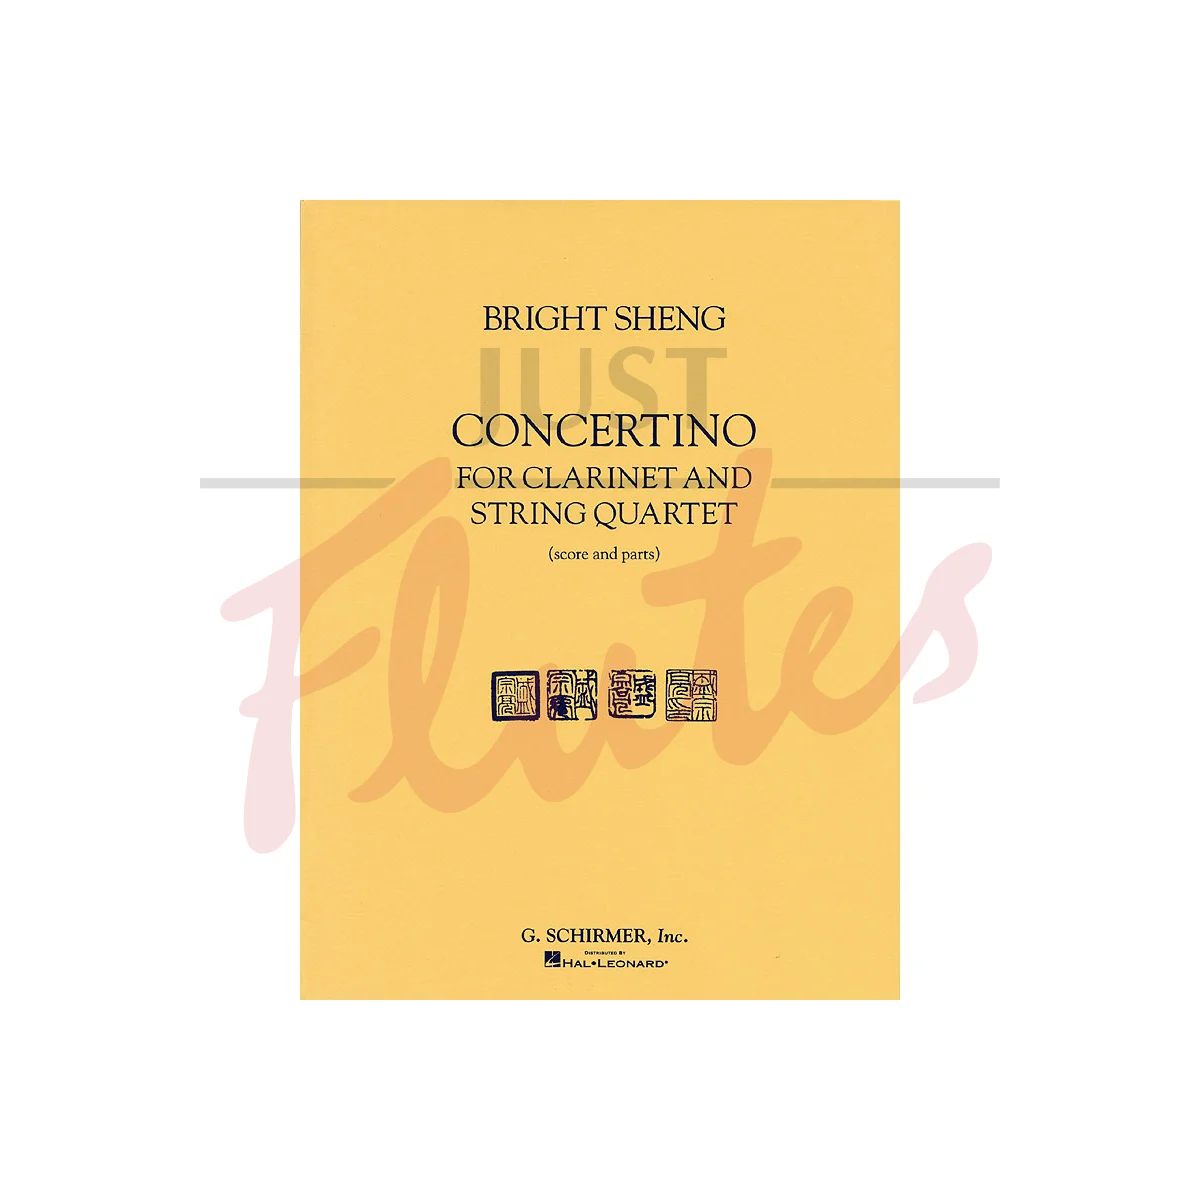 Concertino for Clarinet and String Quartet